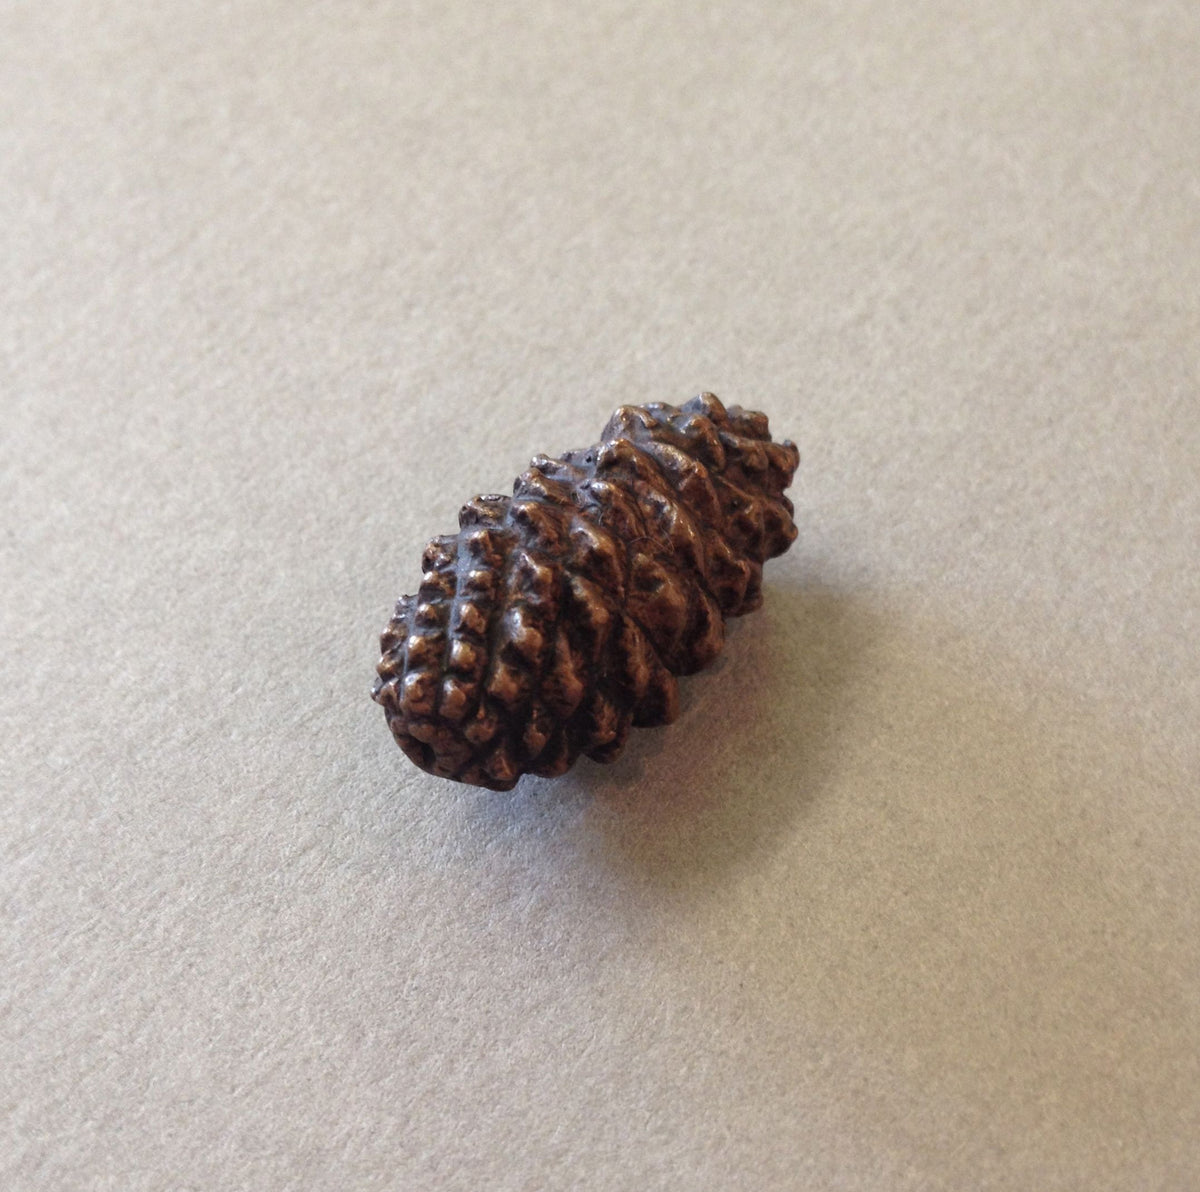 Miniature Pinecone by David Meredith